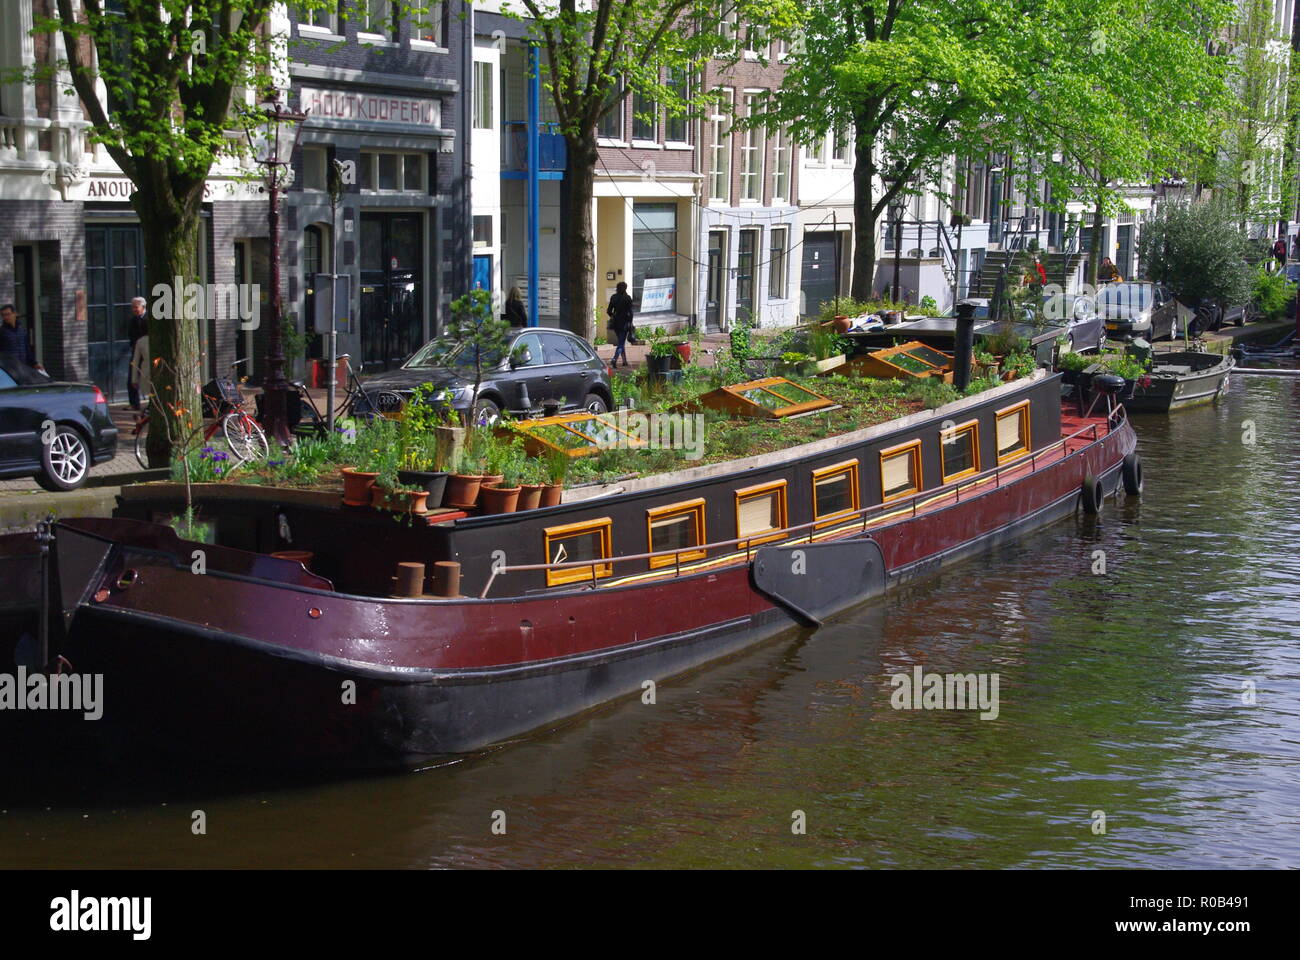 Houseboat in Amsterdam Foto stock - Alamy